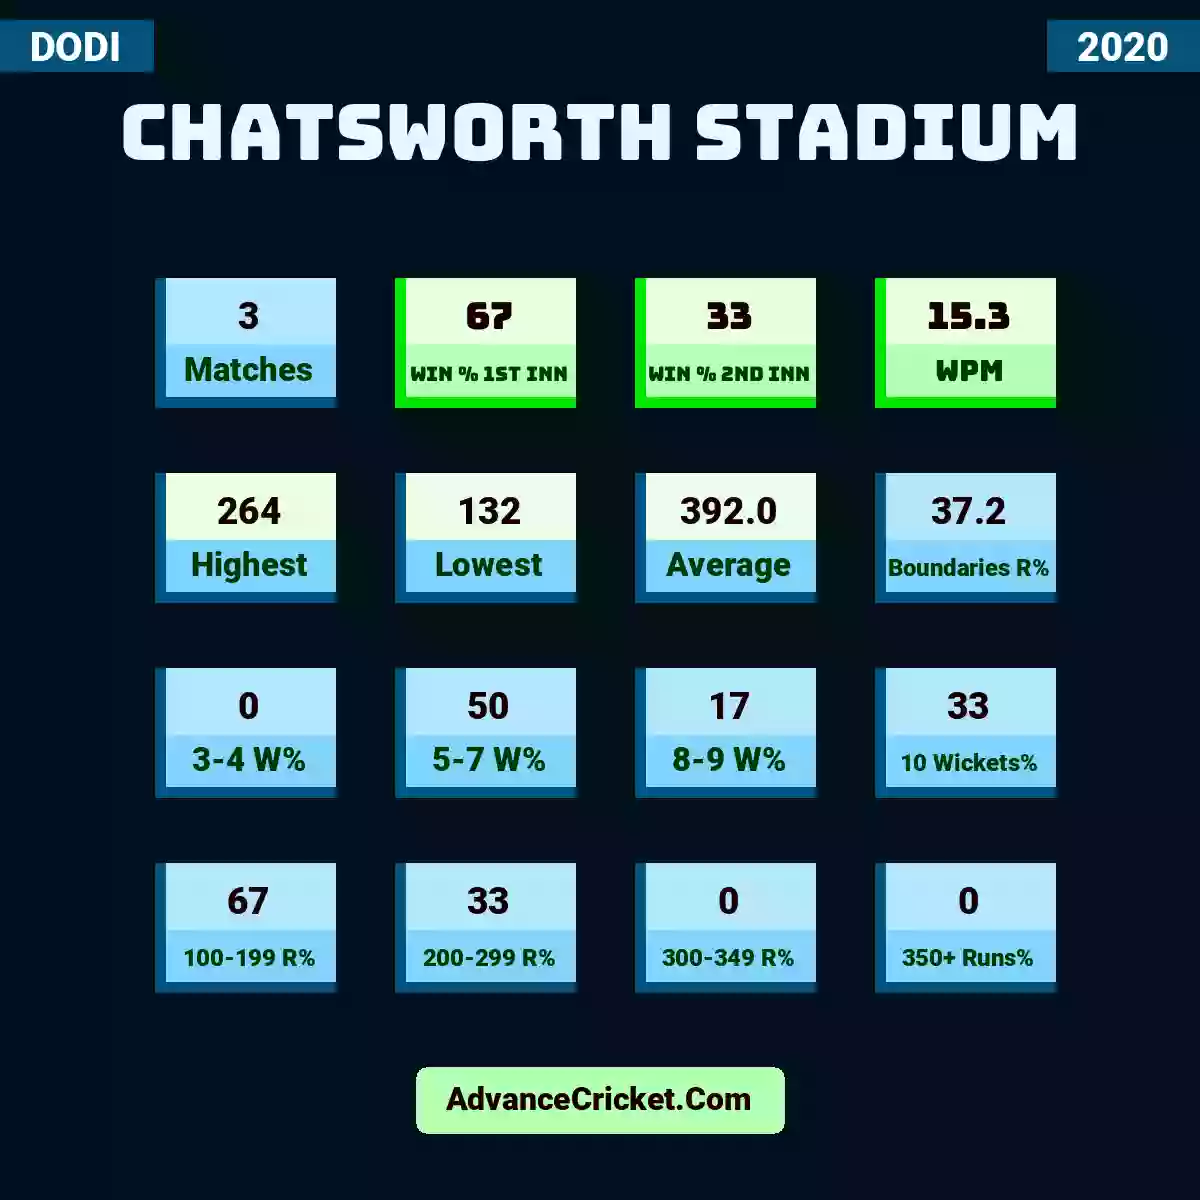 Image showing Chatsworth Stadium with Matches: 3, Win % 1st Inn: 67, Win % 2nd Inn: 33, WPM: 15.3, Highest: 264, Lowest: 132, Average: 392.0, Boundaries R%: 37.2, 3-4 W%: 0, 5-7 W%: 50, 8-9 W%: 17, 10 Wickets%: 33, 100-199 R%: 67, 200-299 R%: 33, 300-349 R%: 0, 350+ Runs%: 0.